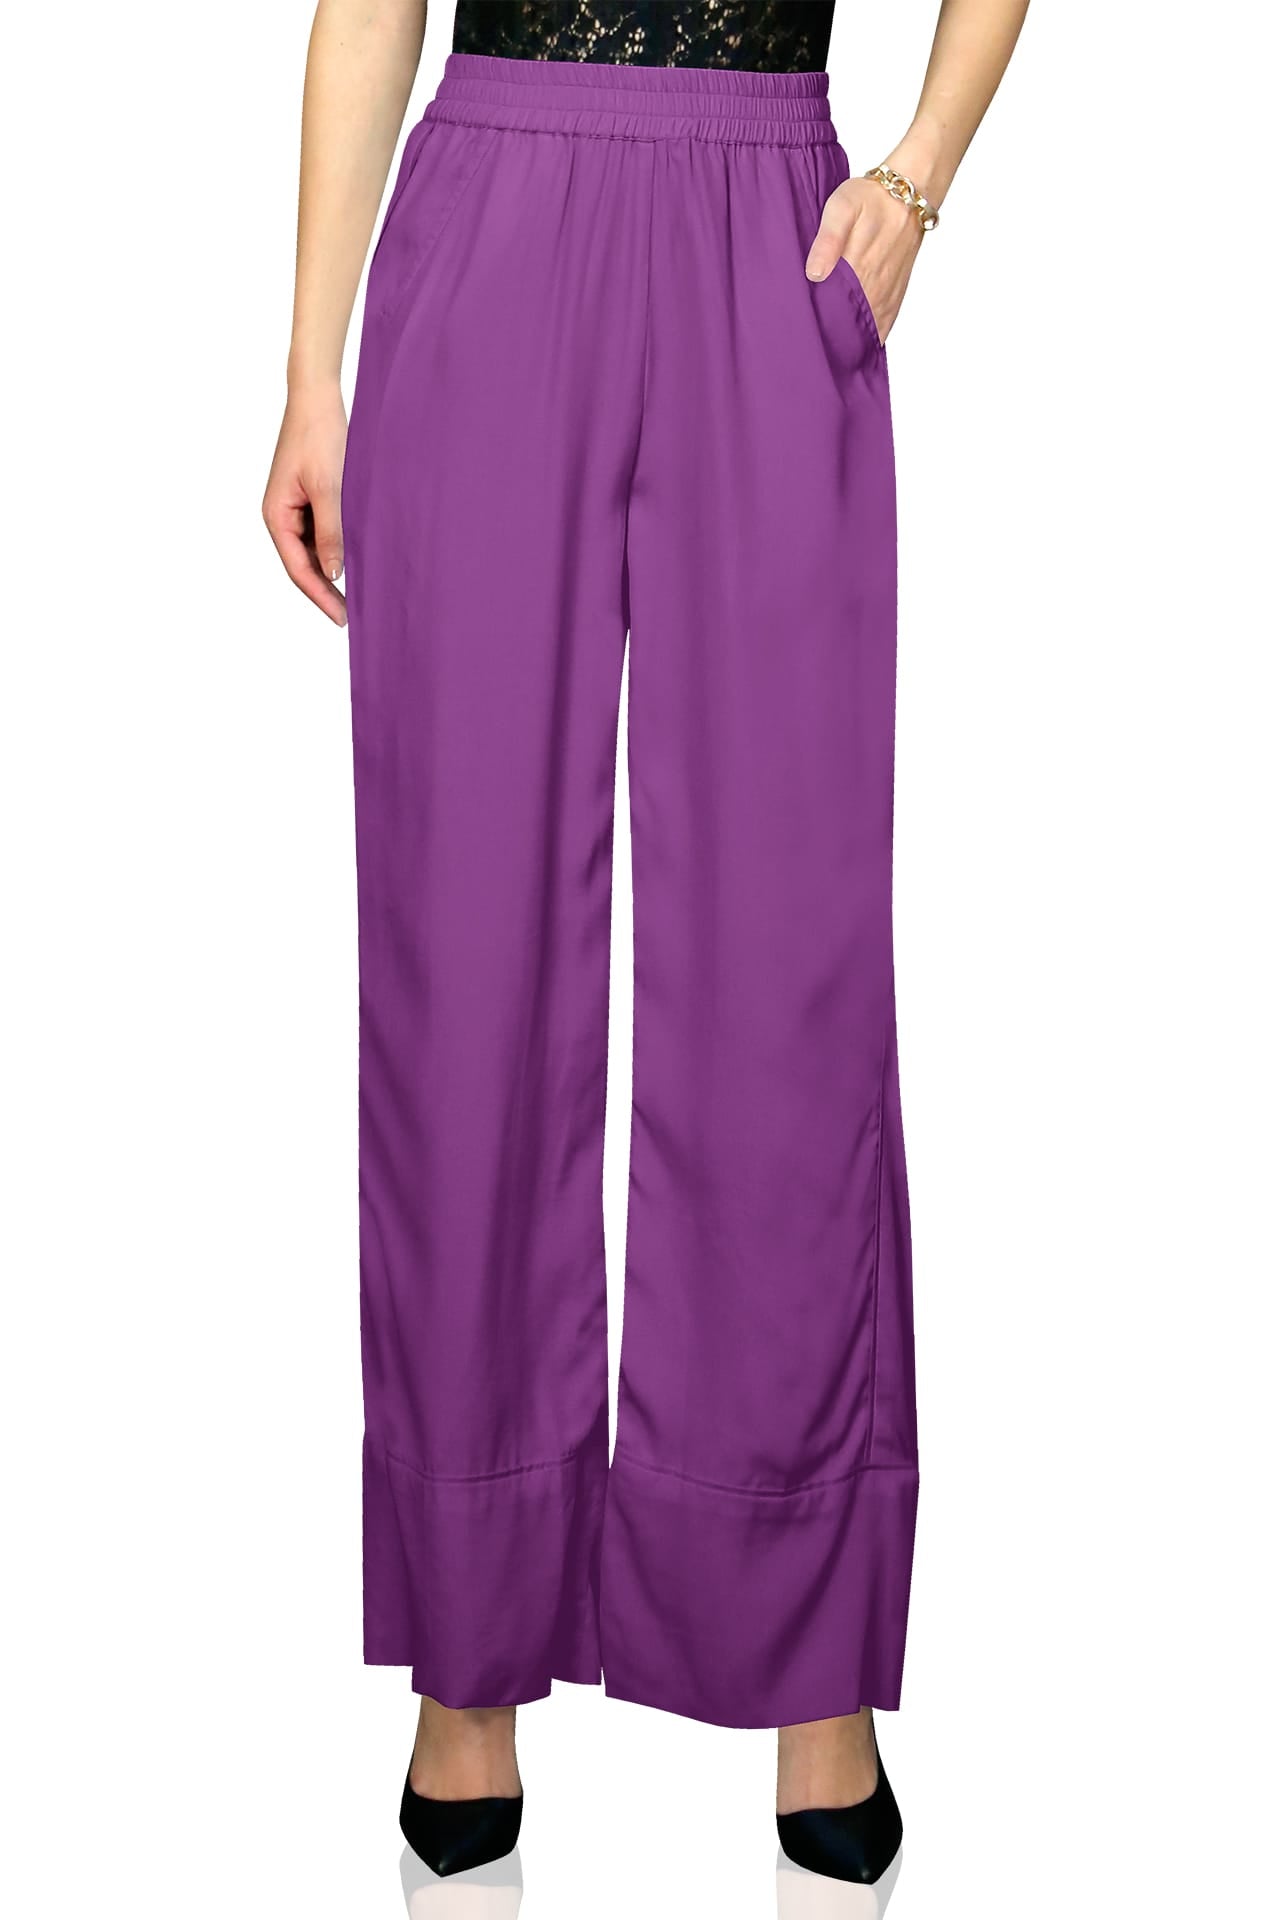 "Kyle X Shahida" "plazzo pant for women" "straight leg pull on pants" "purple high waisted pants"